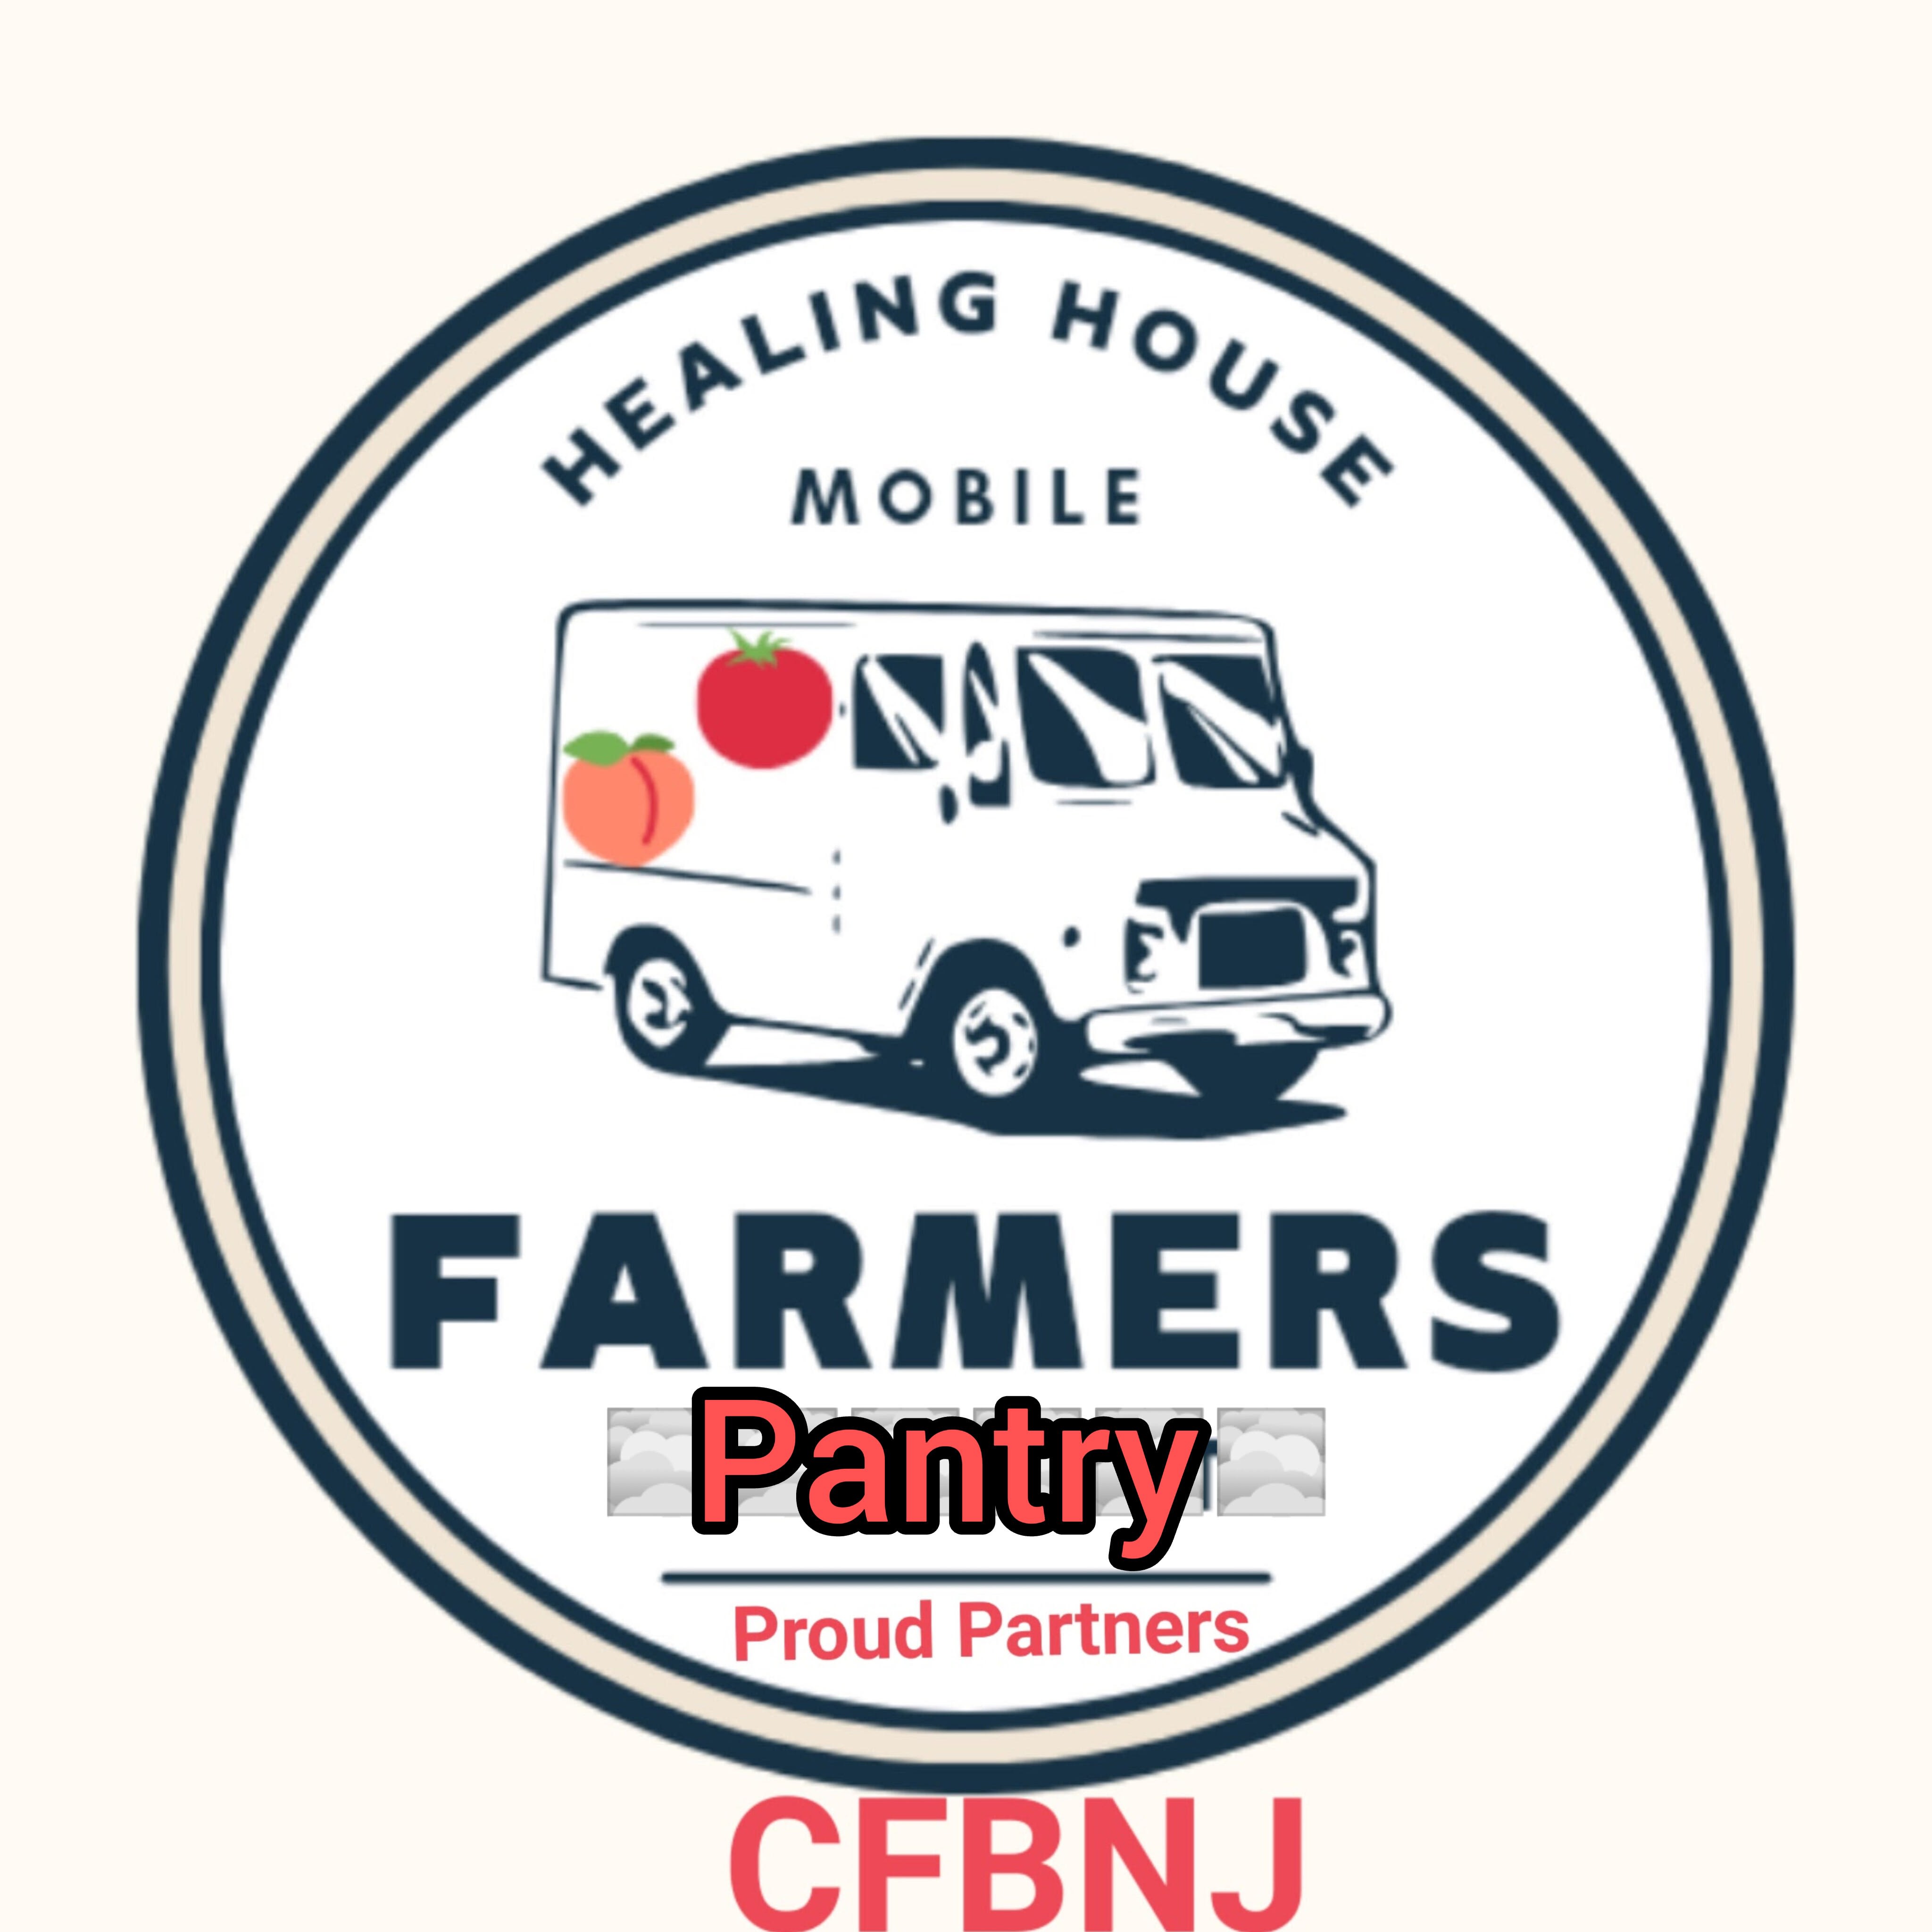 Healing House Mobile Farmer's Pantry